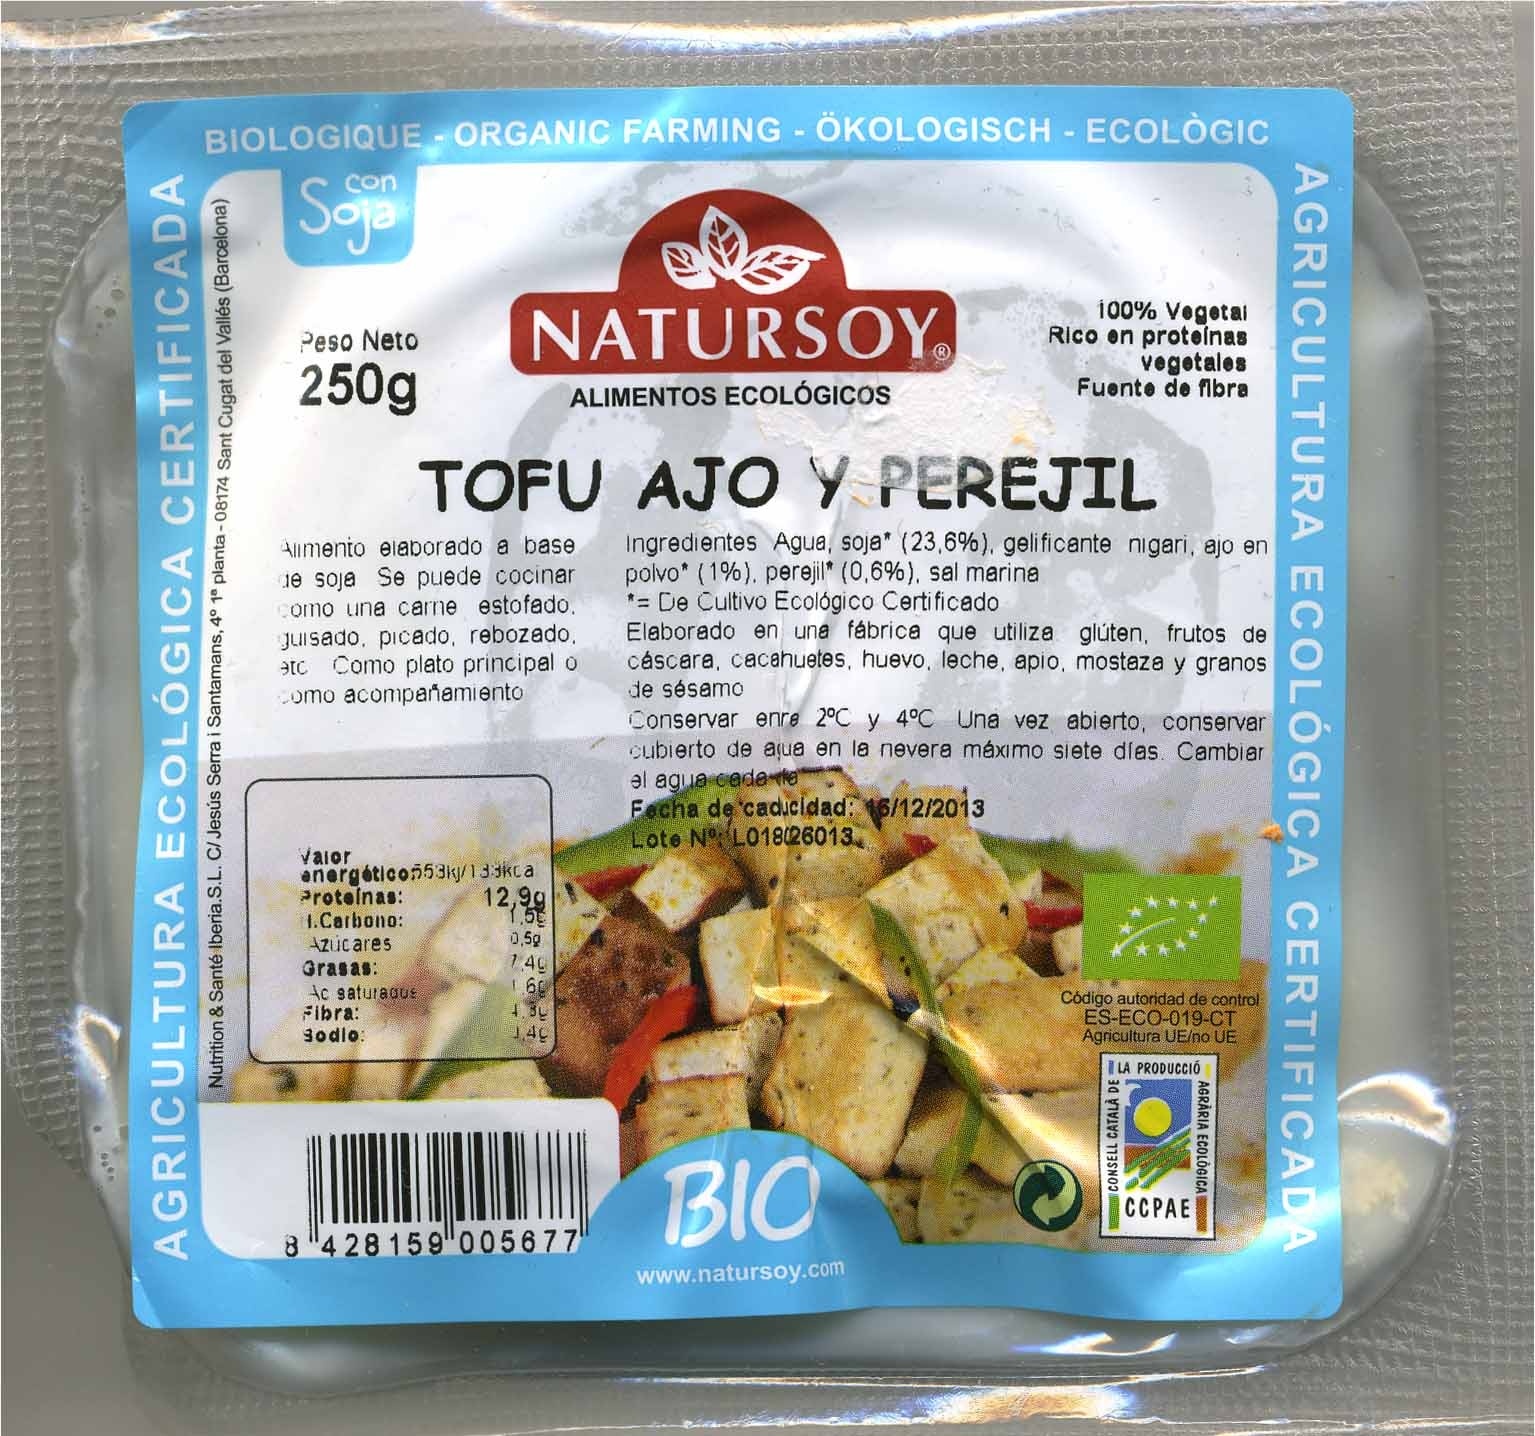 Tofu Ajo y perejil - Product - es